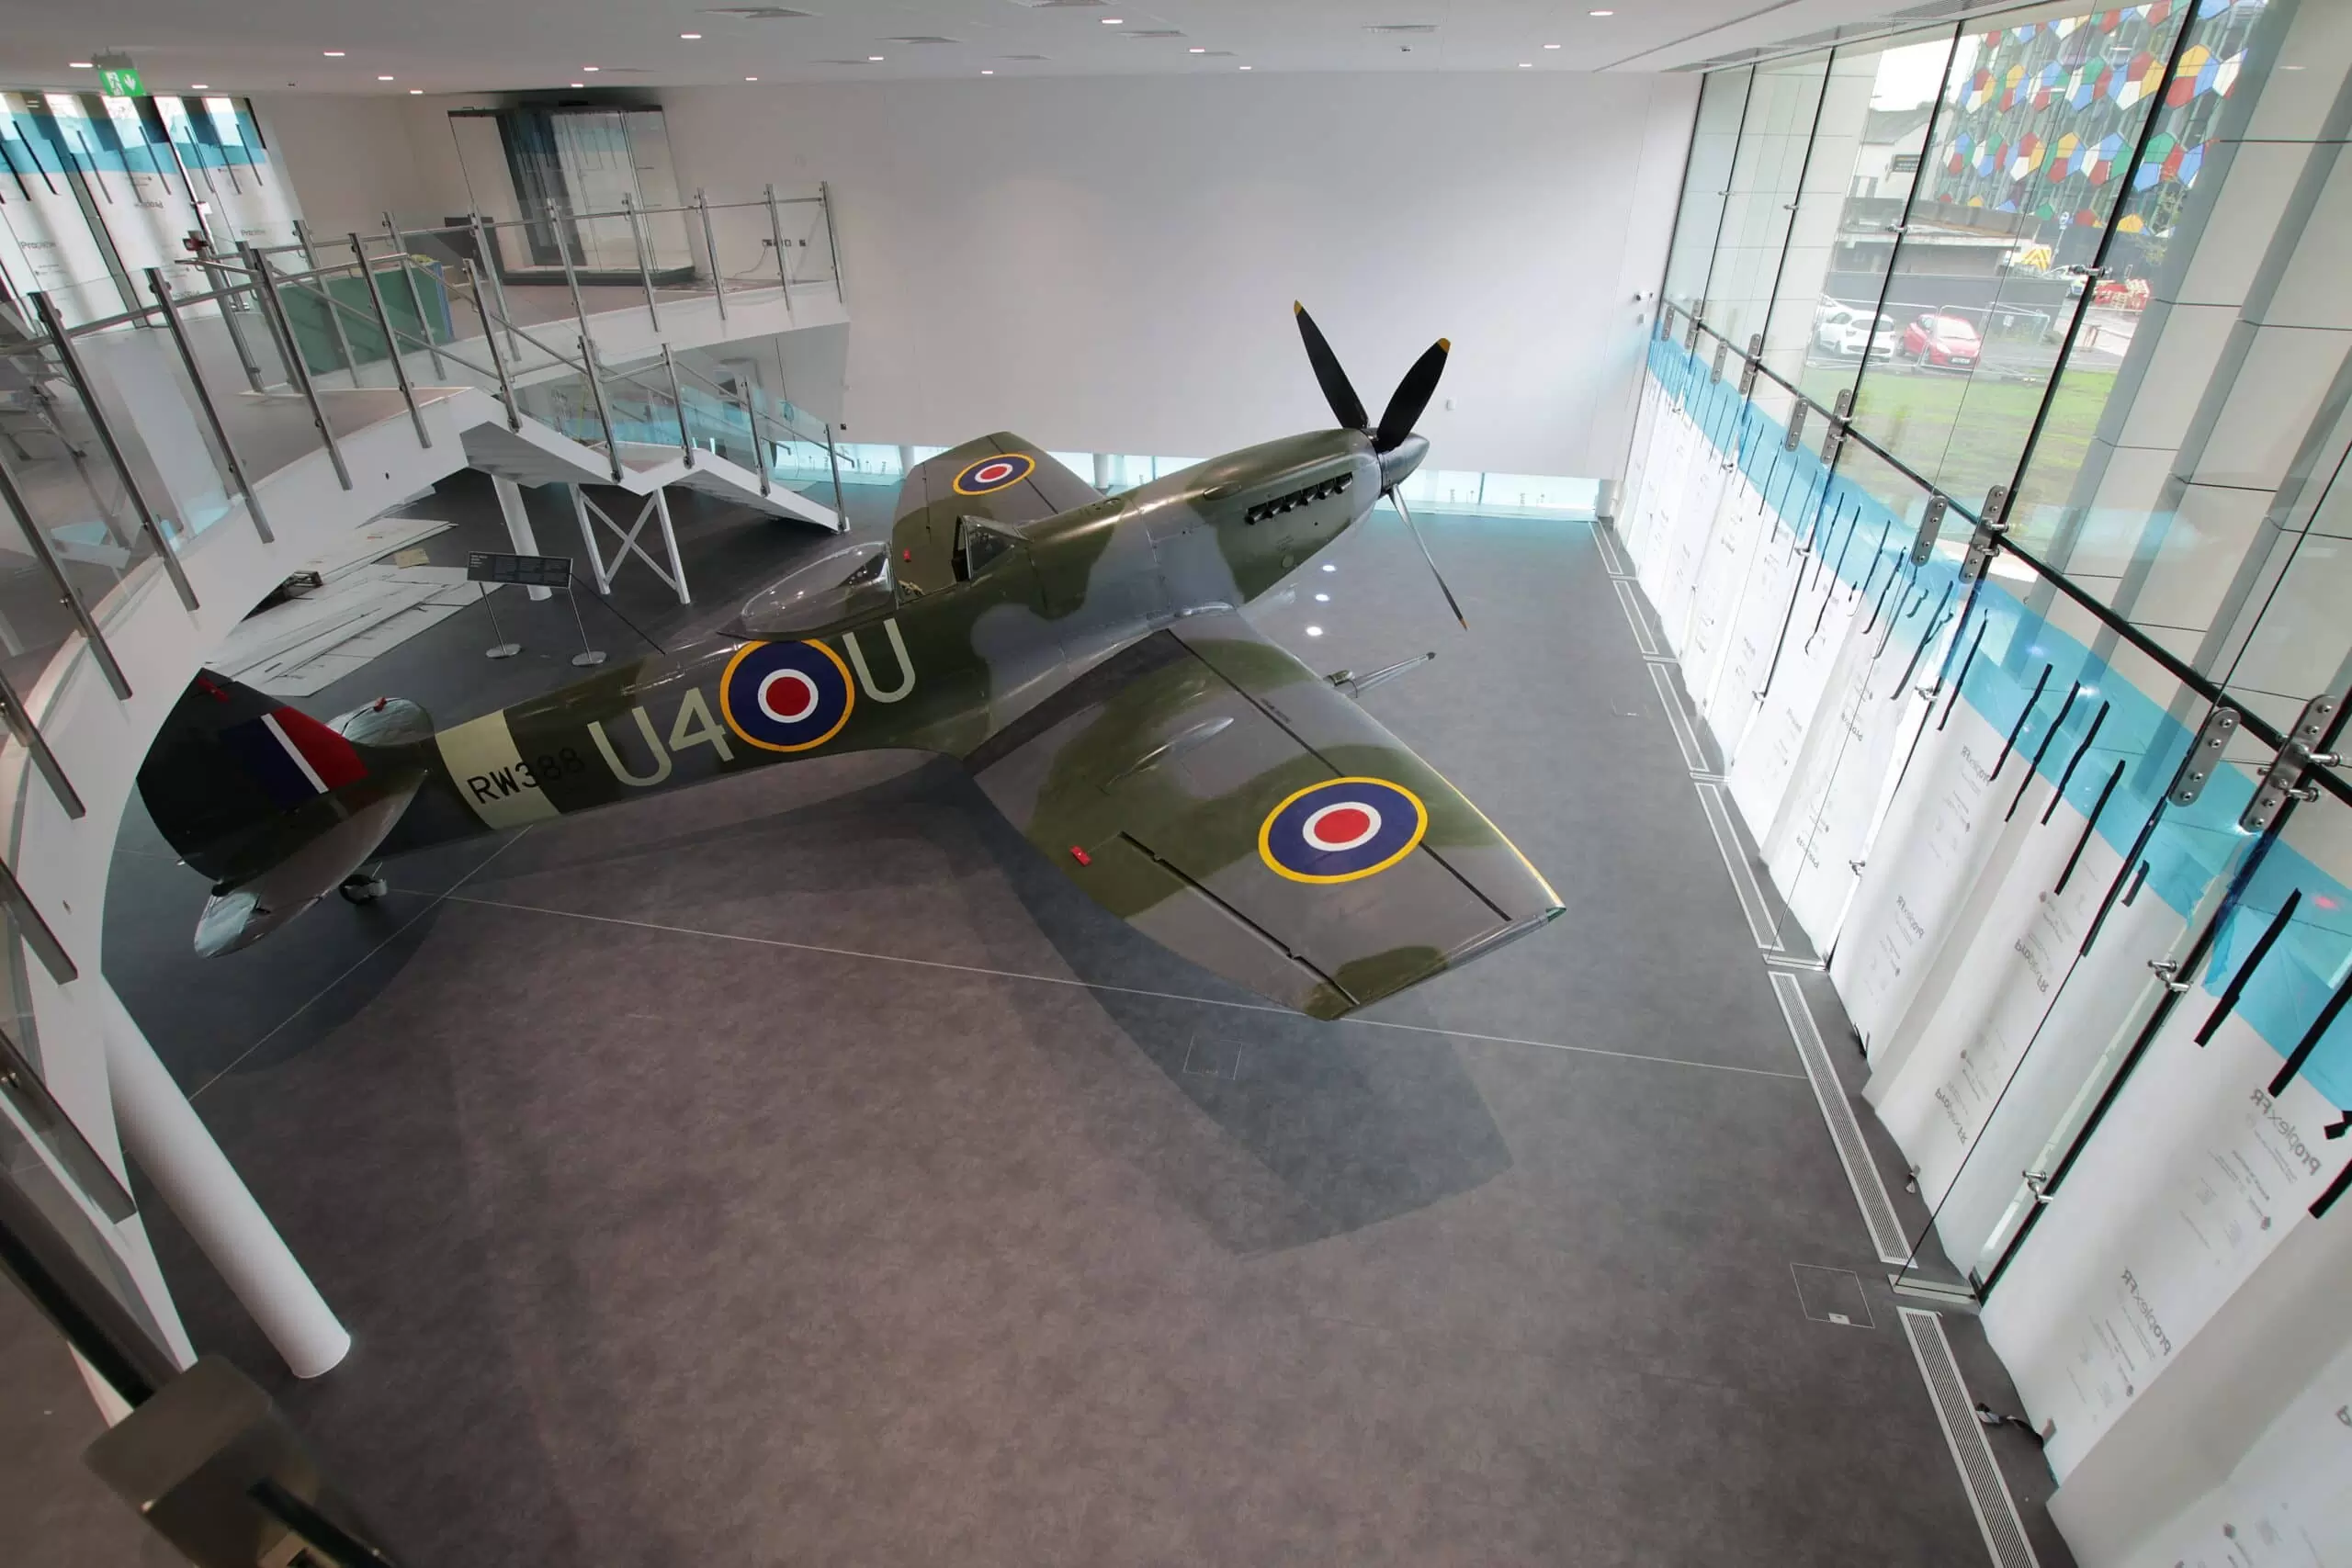 Spitfire RW388 reconstruction